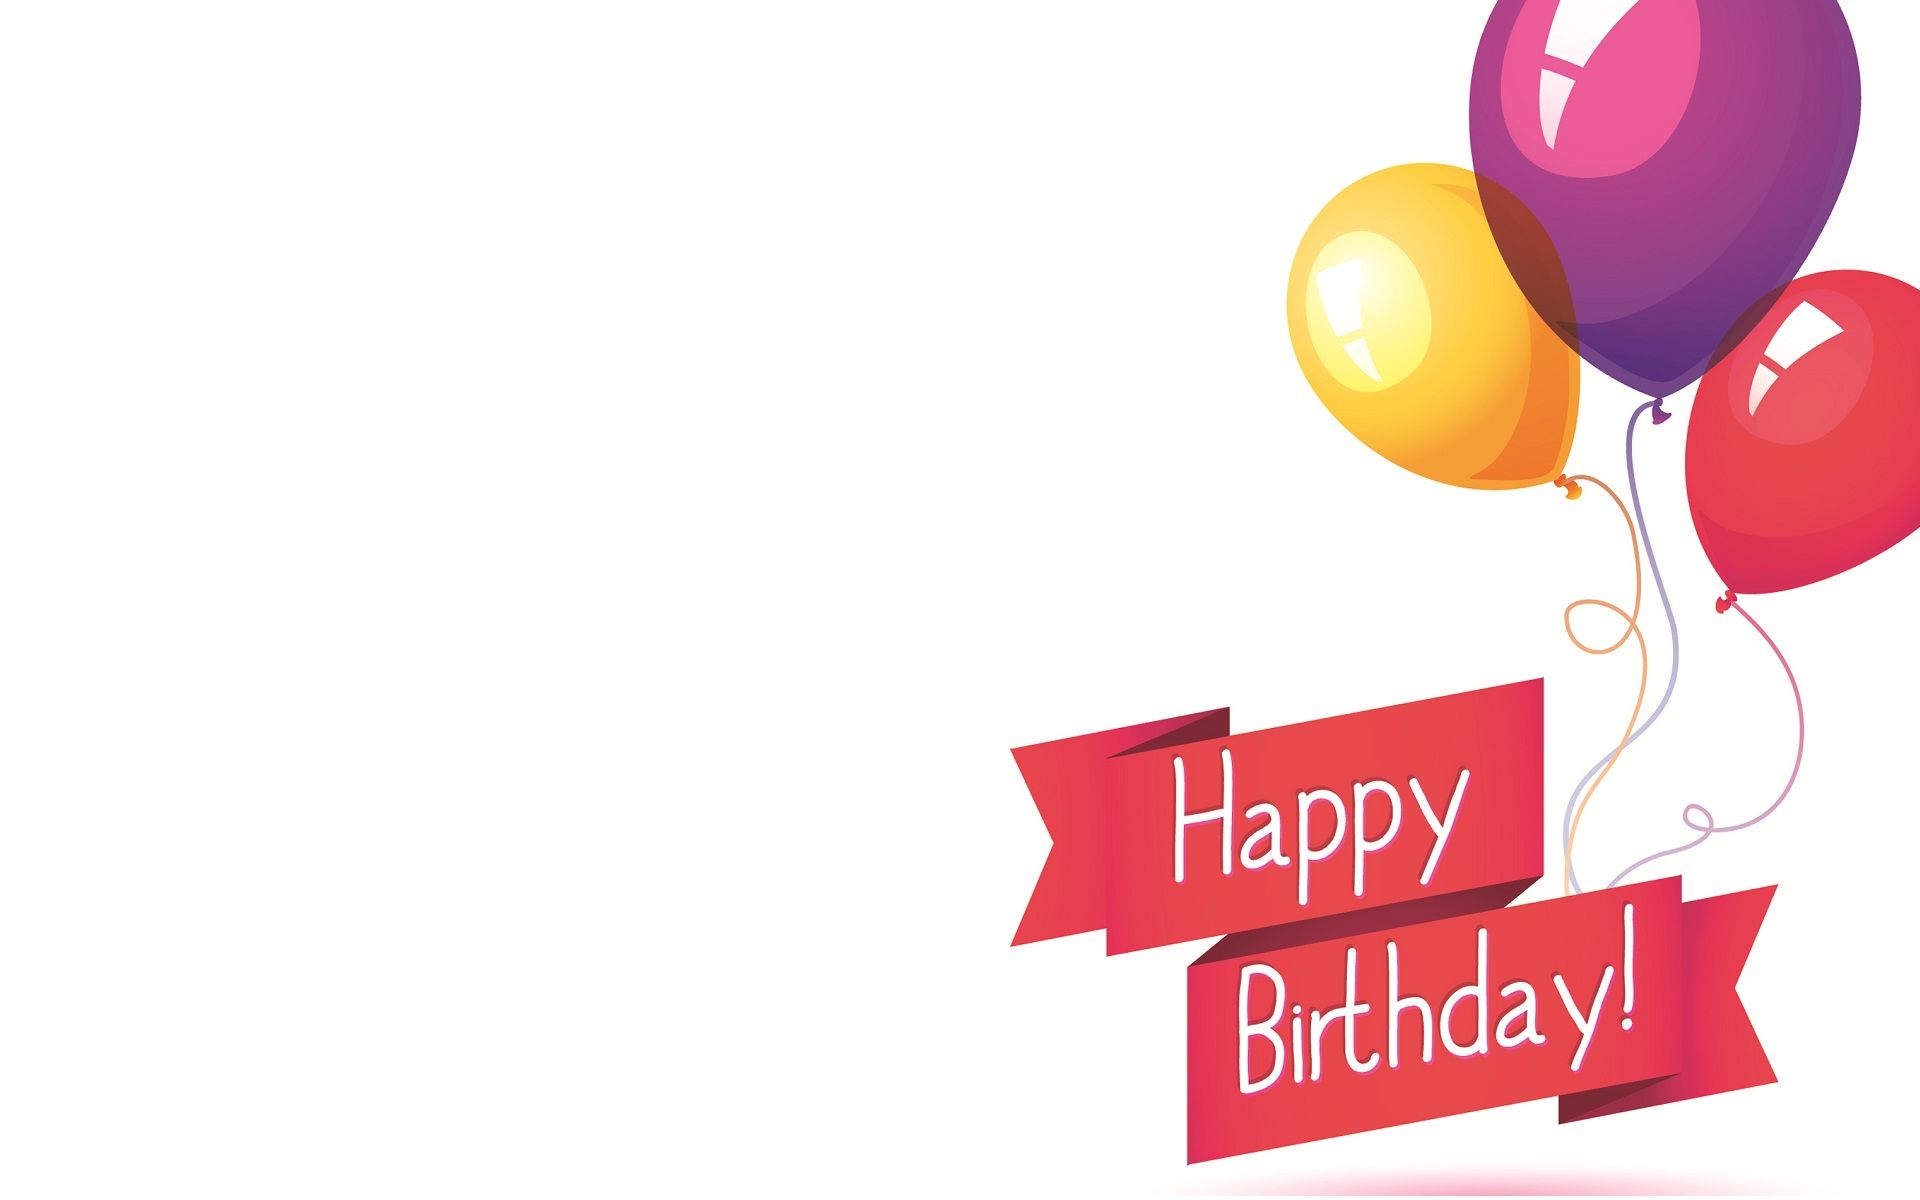 Happy Birthday Image HD Wallpaper Free Download 1920x1200